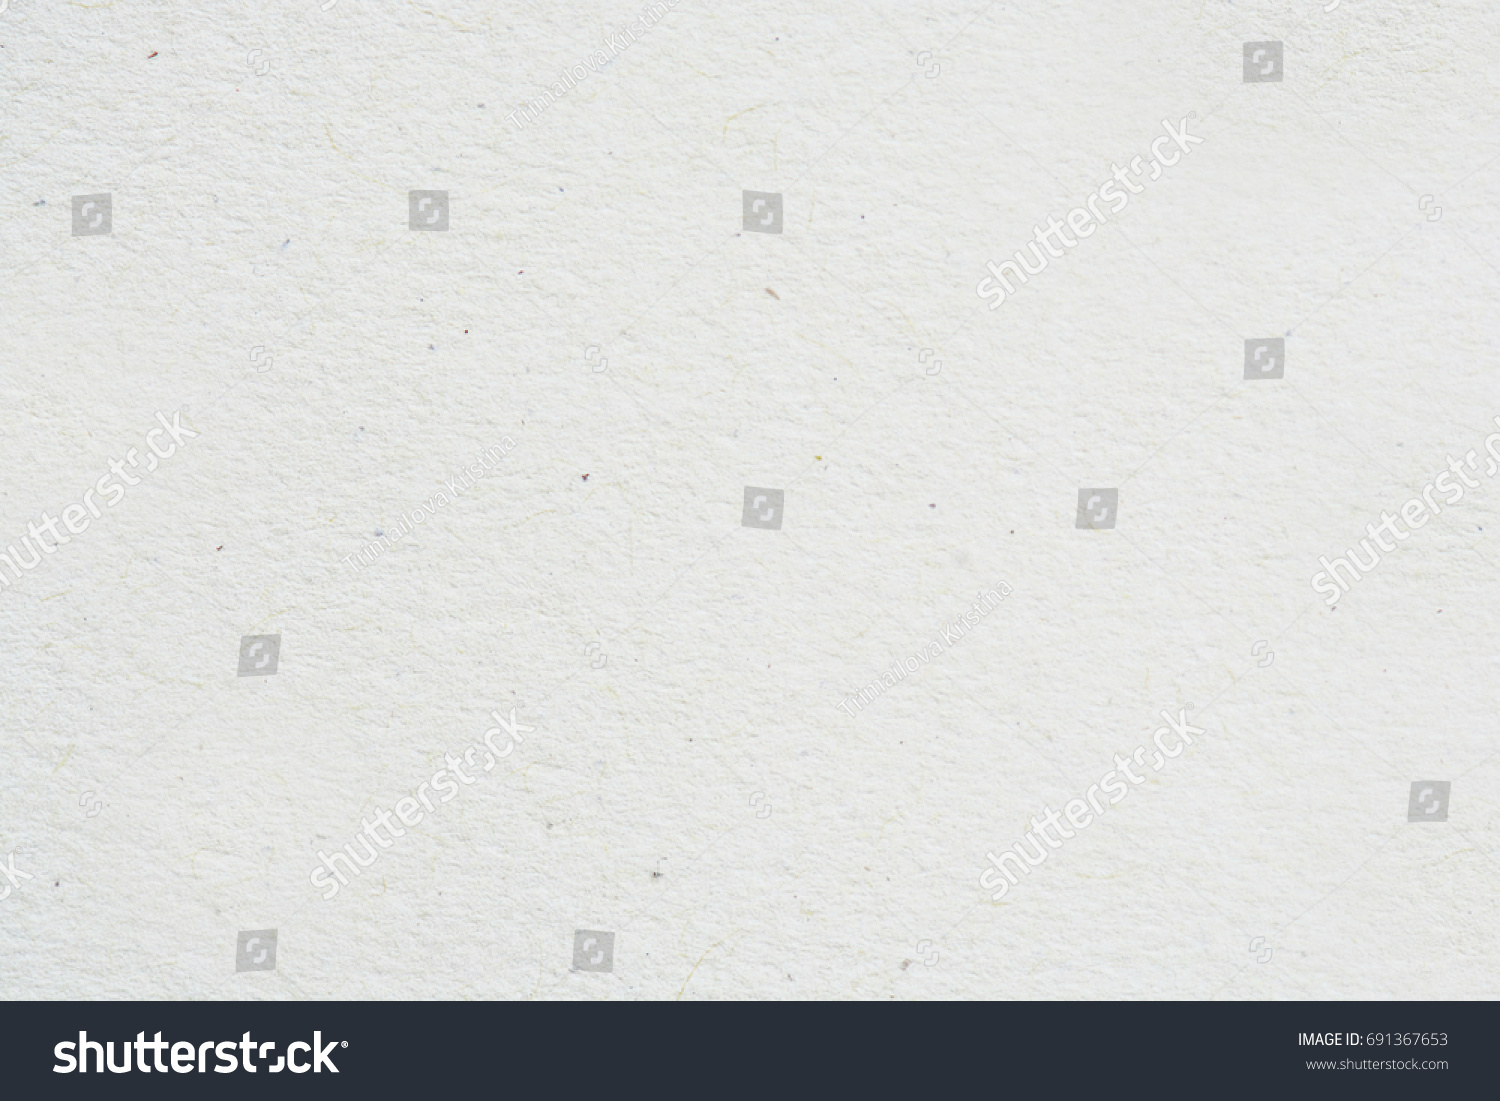 White design paper background. Cotton paper chalkboard. #691367653